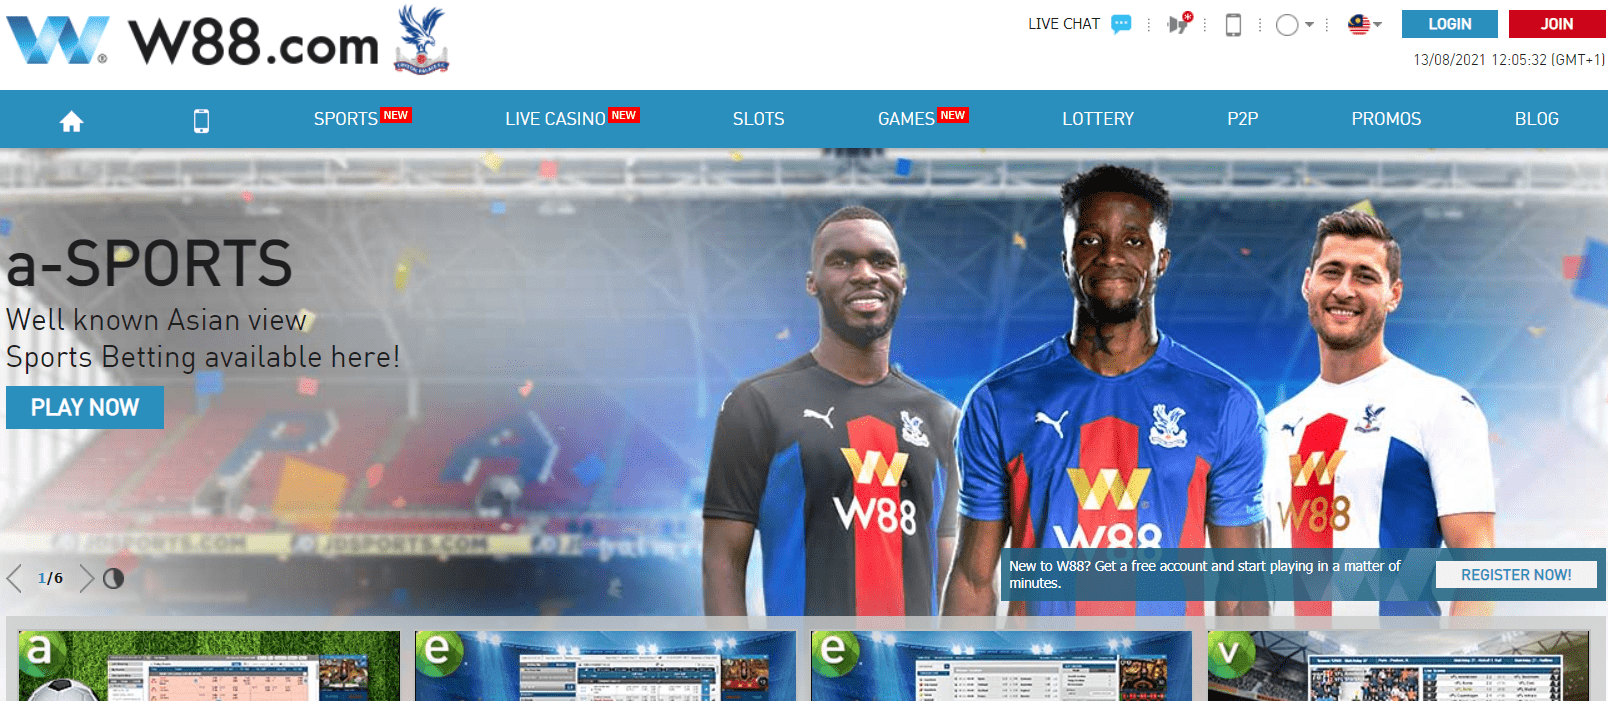 W88 betting site - homepage screen